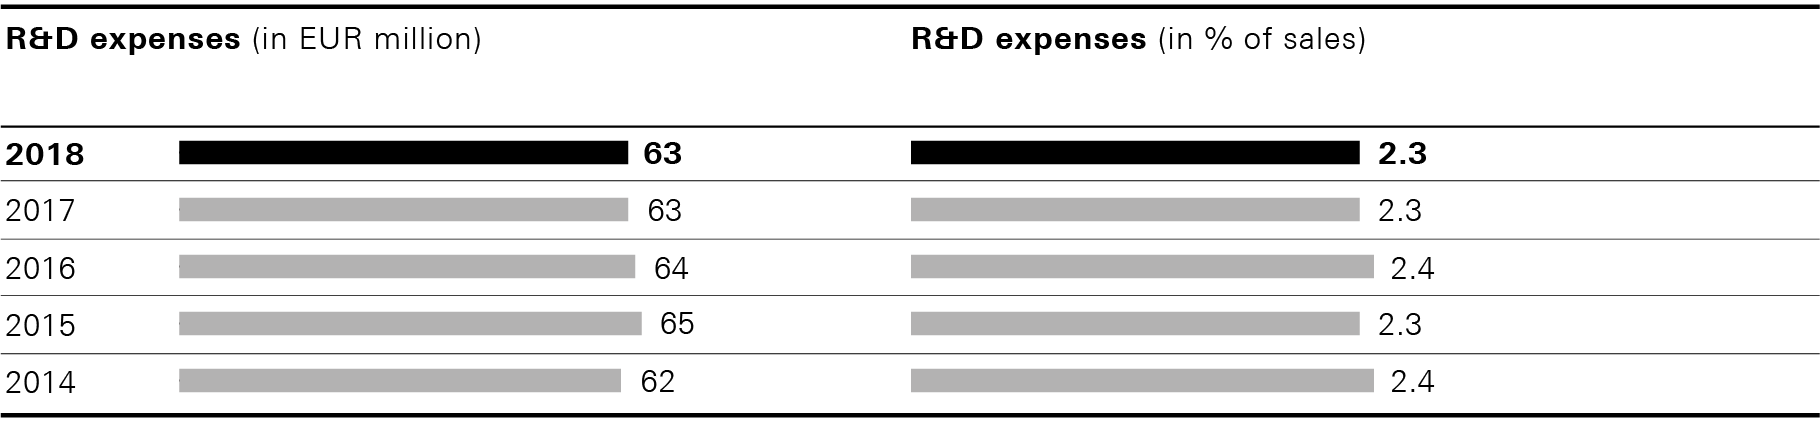 R&D expenses (bar chart)